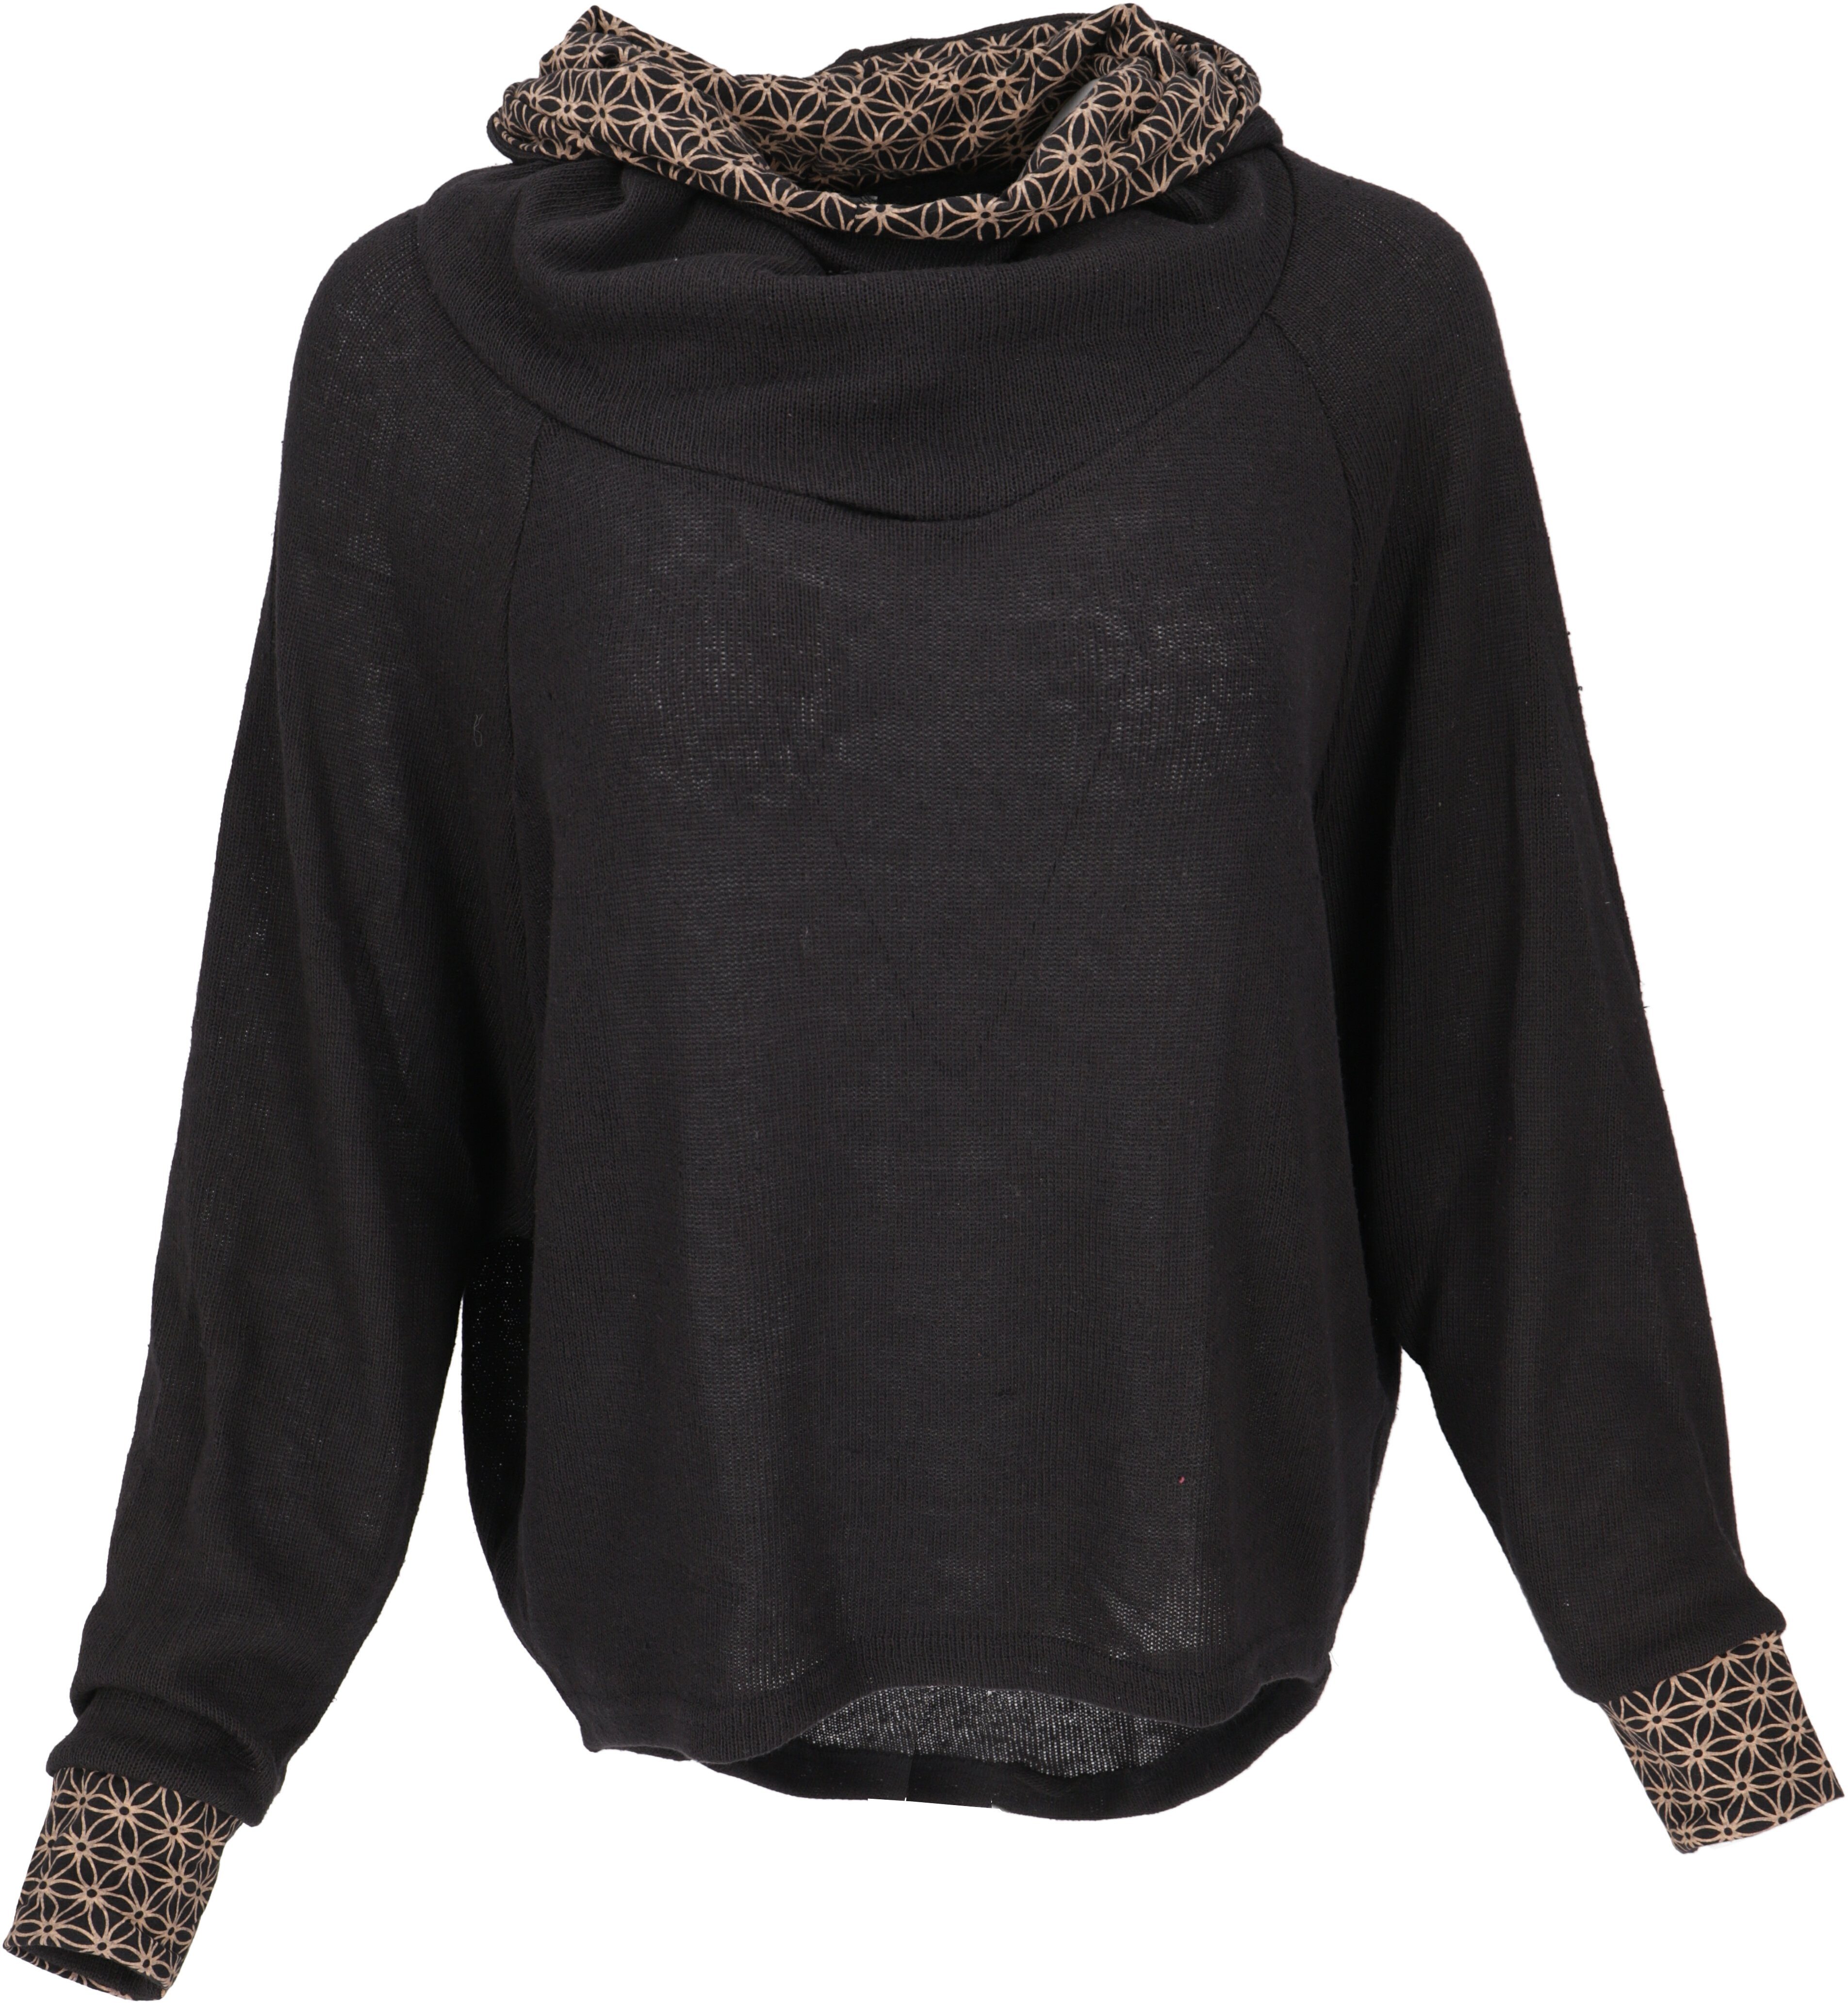 Sweatshirt, Bekleidung Longsleeve alternative -.. schwarz Guru-Shop Pullover, Hoody, Kapuzenpullover